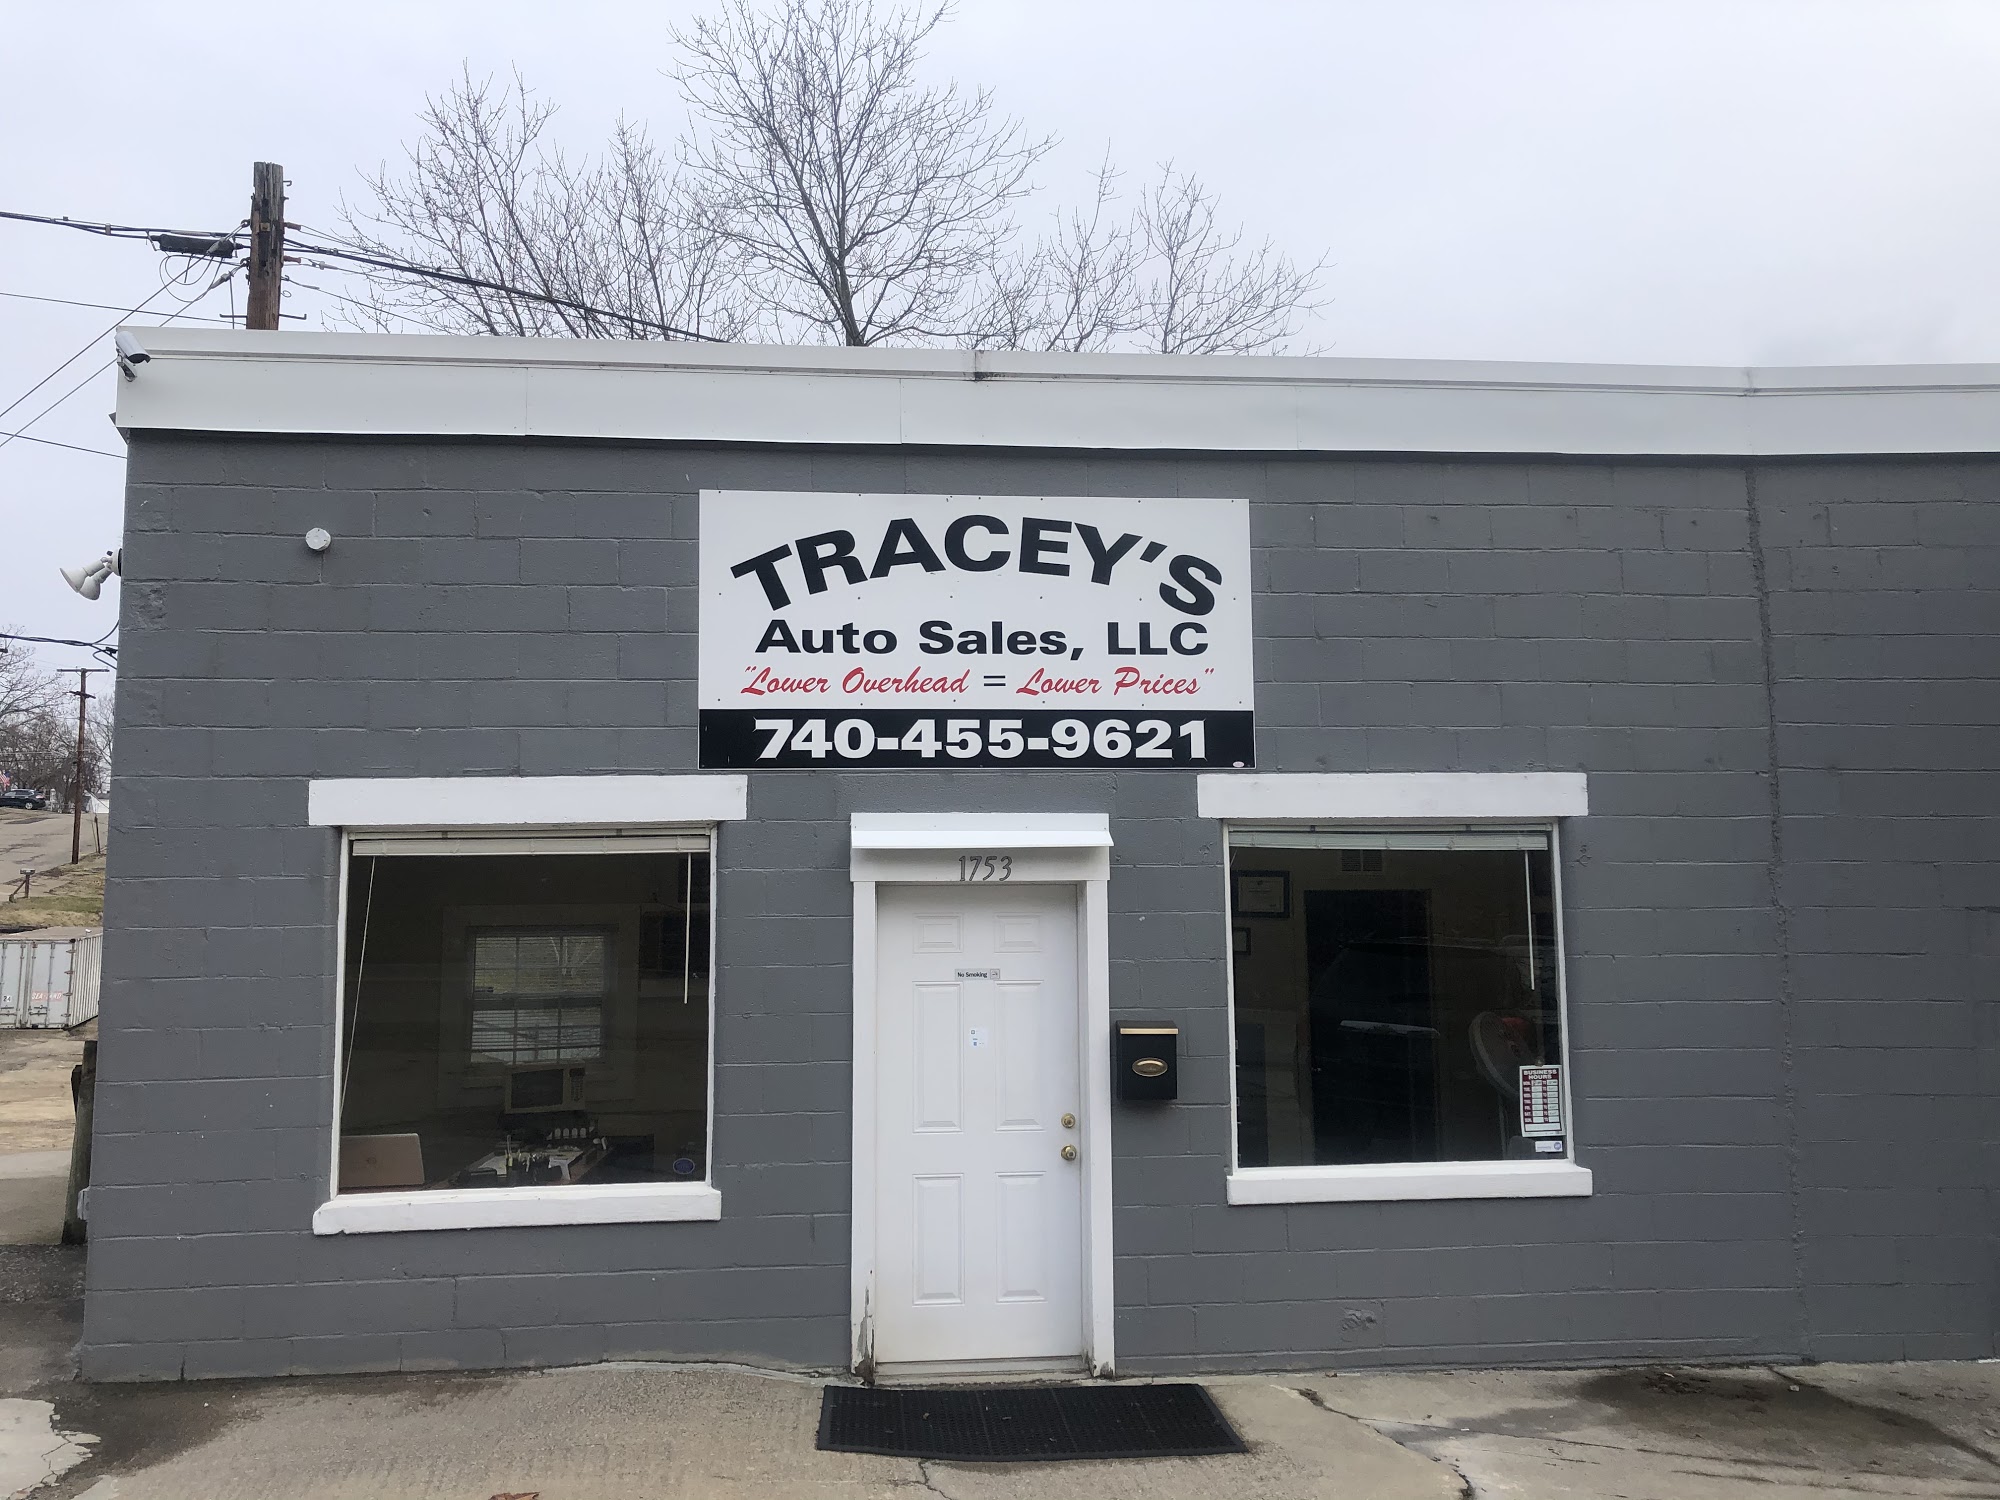 Tracey's Auto Sales, LLC